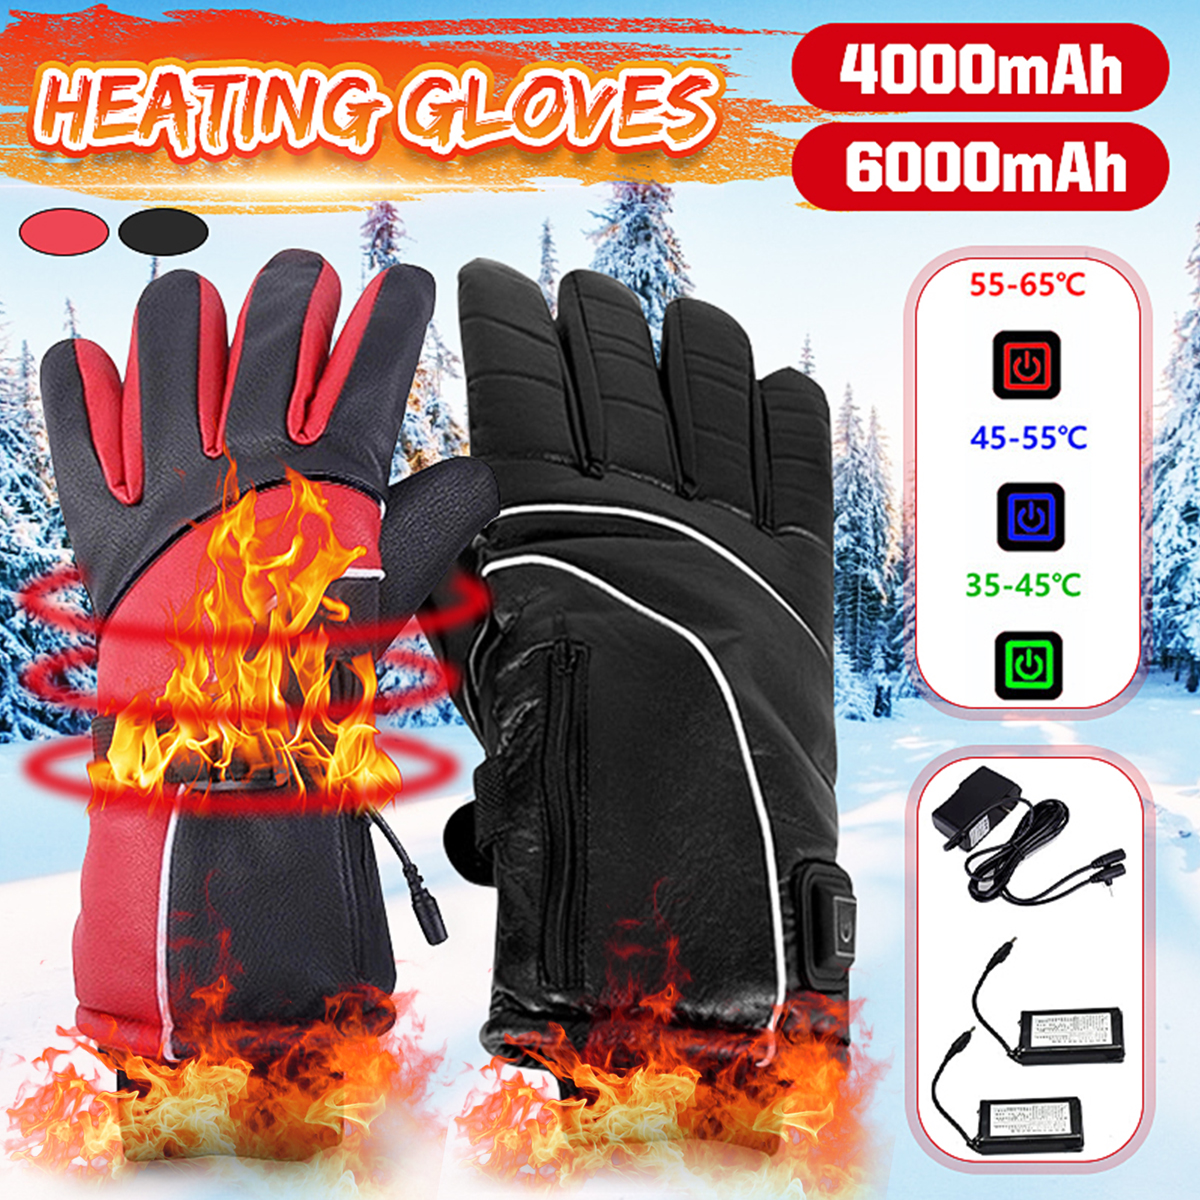 40006000mAh-Electric-Battery-Heating-Gloves-Men-Women-Winter-Heated-Warmer-Sport-Protector-1618098-1